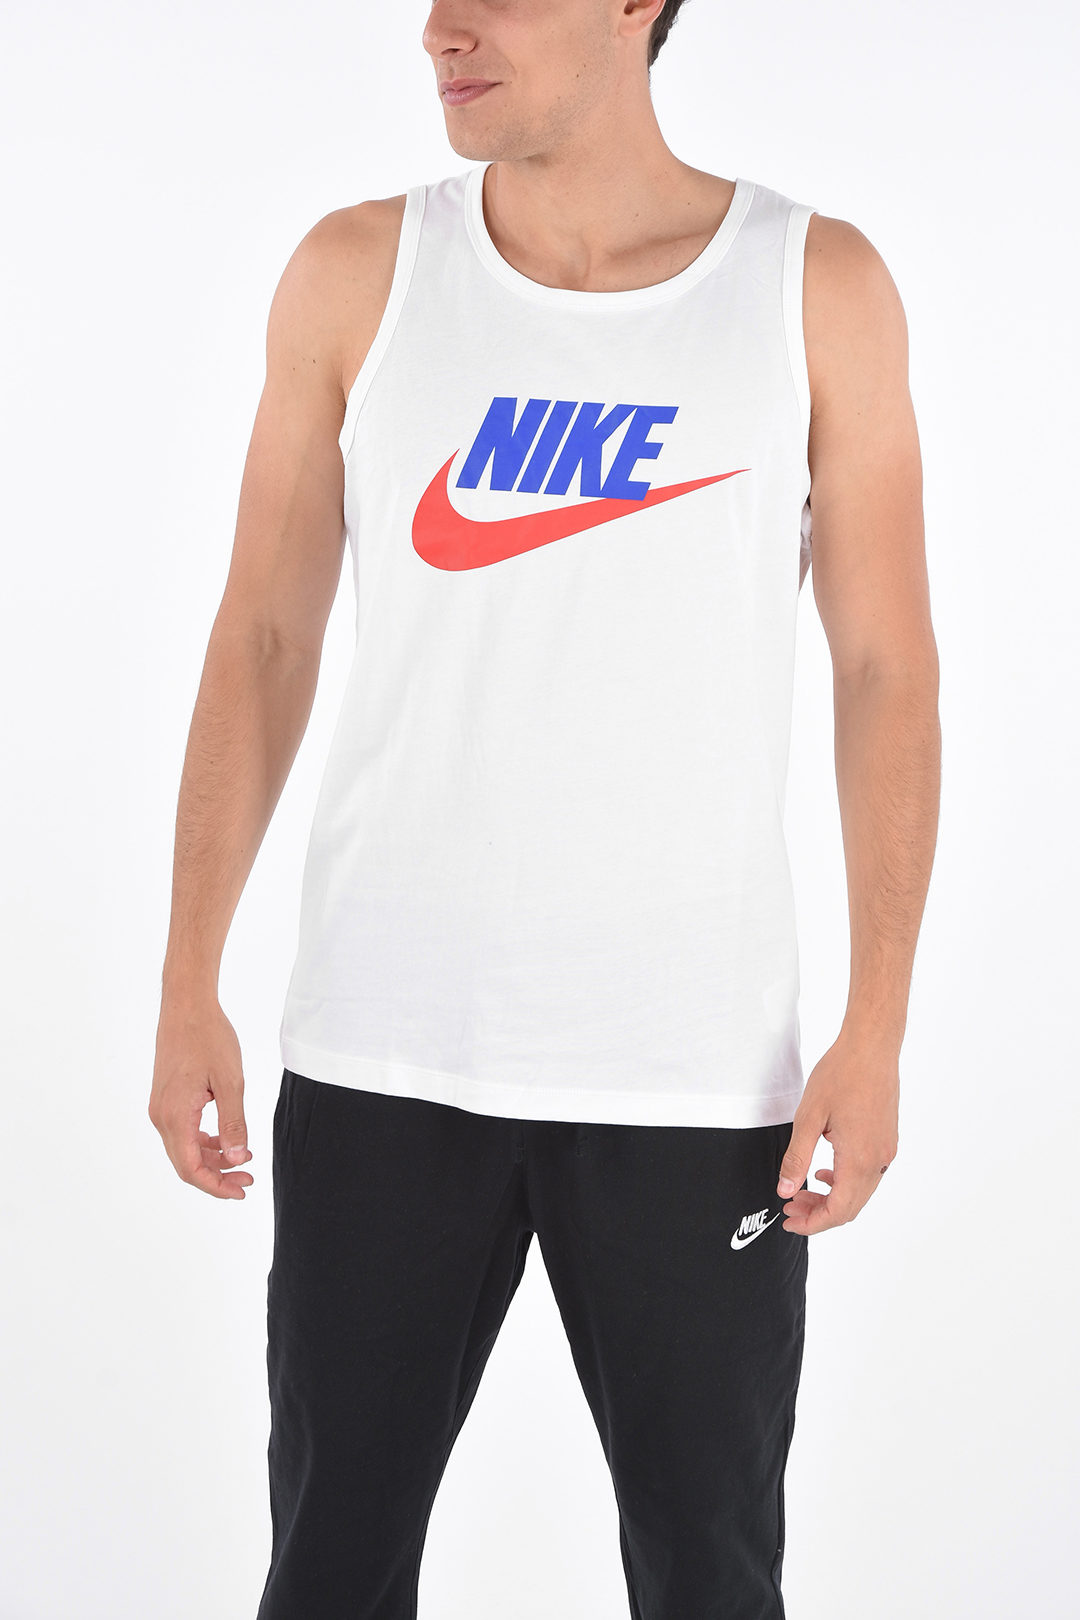 Nike Printed Tank Top men - Glamood Outlet